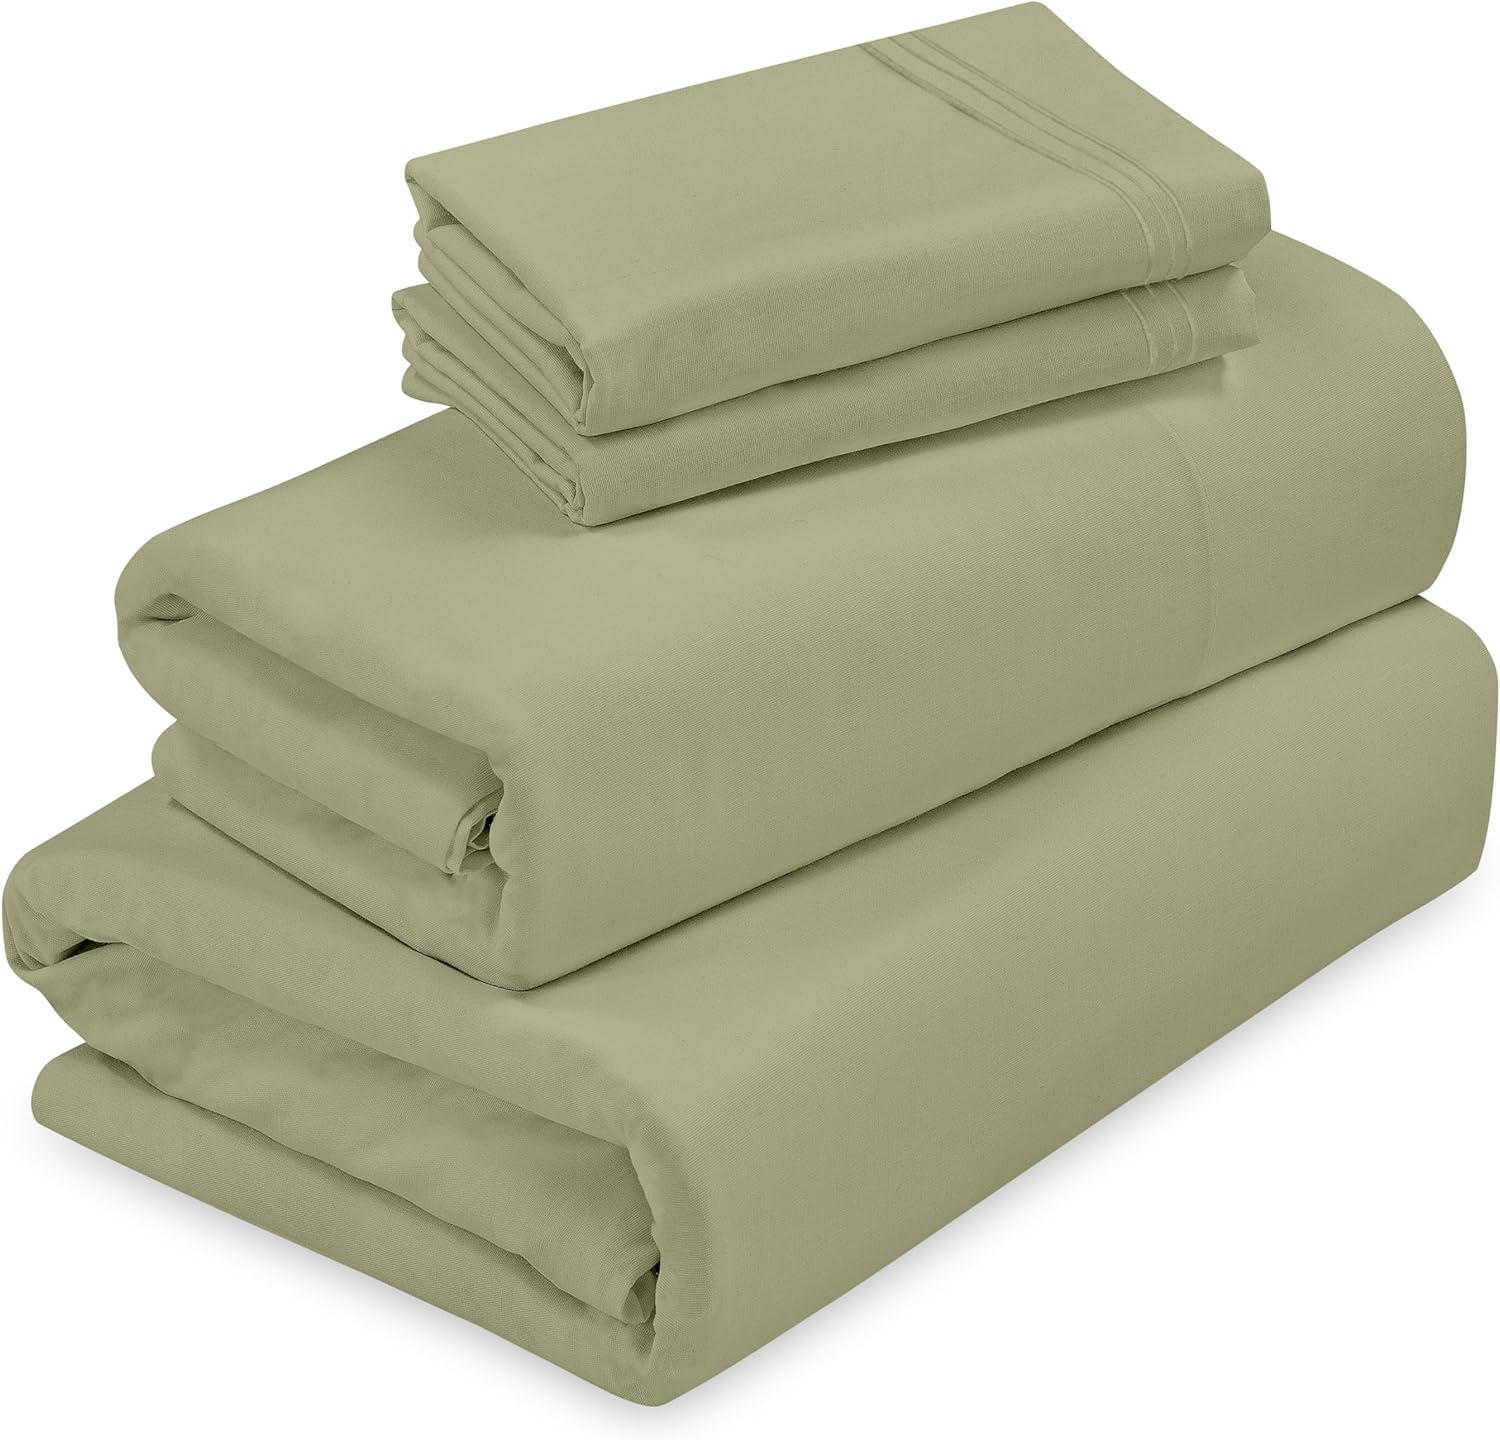 ROYALE LINENS - 4 Piece California King Bed Sheet - Brushed Microfiber 1800 Bedding - 1 Fitted Sheet, 1 Flat Sheet, 2 Pillow Case - Wrinkle& Fade Resistant Cal King Size Sheet Set (Kingcal,Sage green)